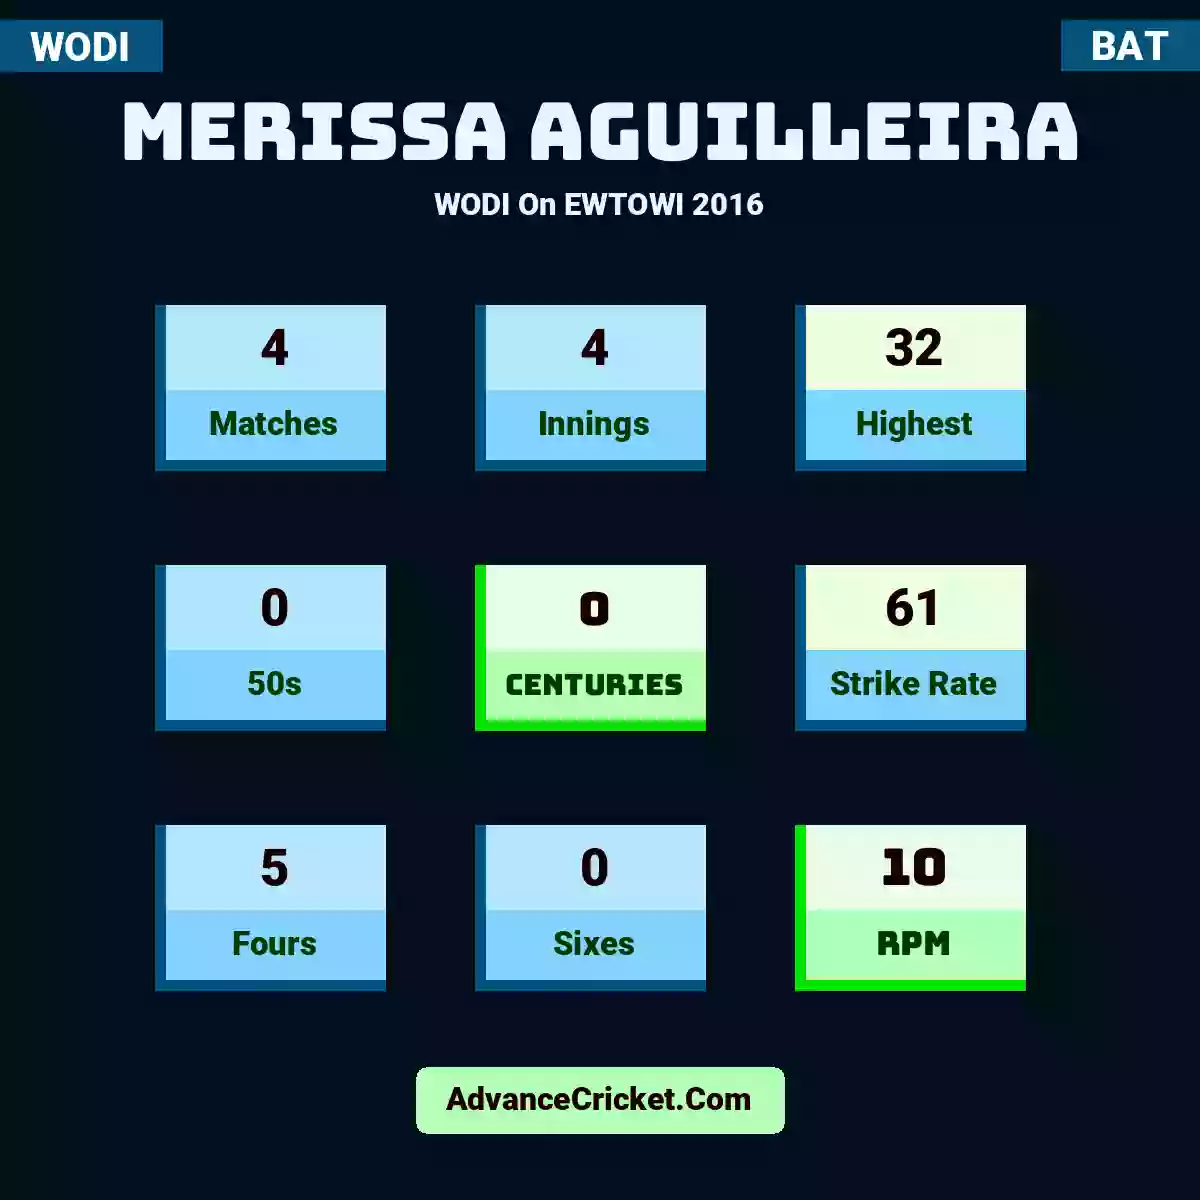 Merissa Aguilleira WODI  On EWTOWI 2016, Merissa Aguilleira played 4 matches, scored 32 runs as highest, 0 half-centuries, and 0 centuries, with a strike rate of 61. M.Aguilleira hit 5 fours and 0 sixes, with an RPM of 10.